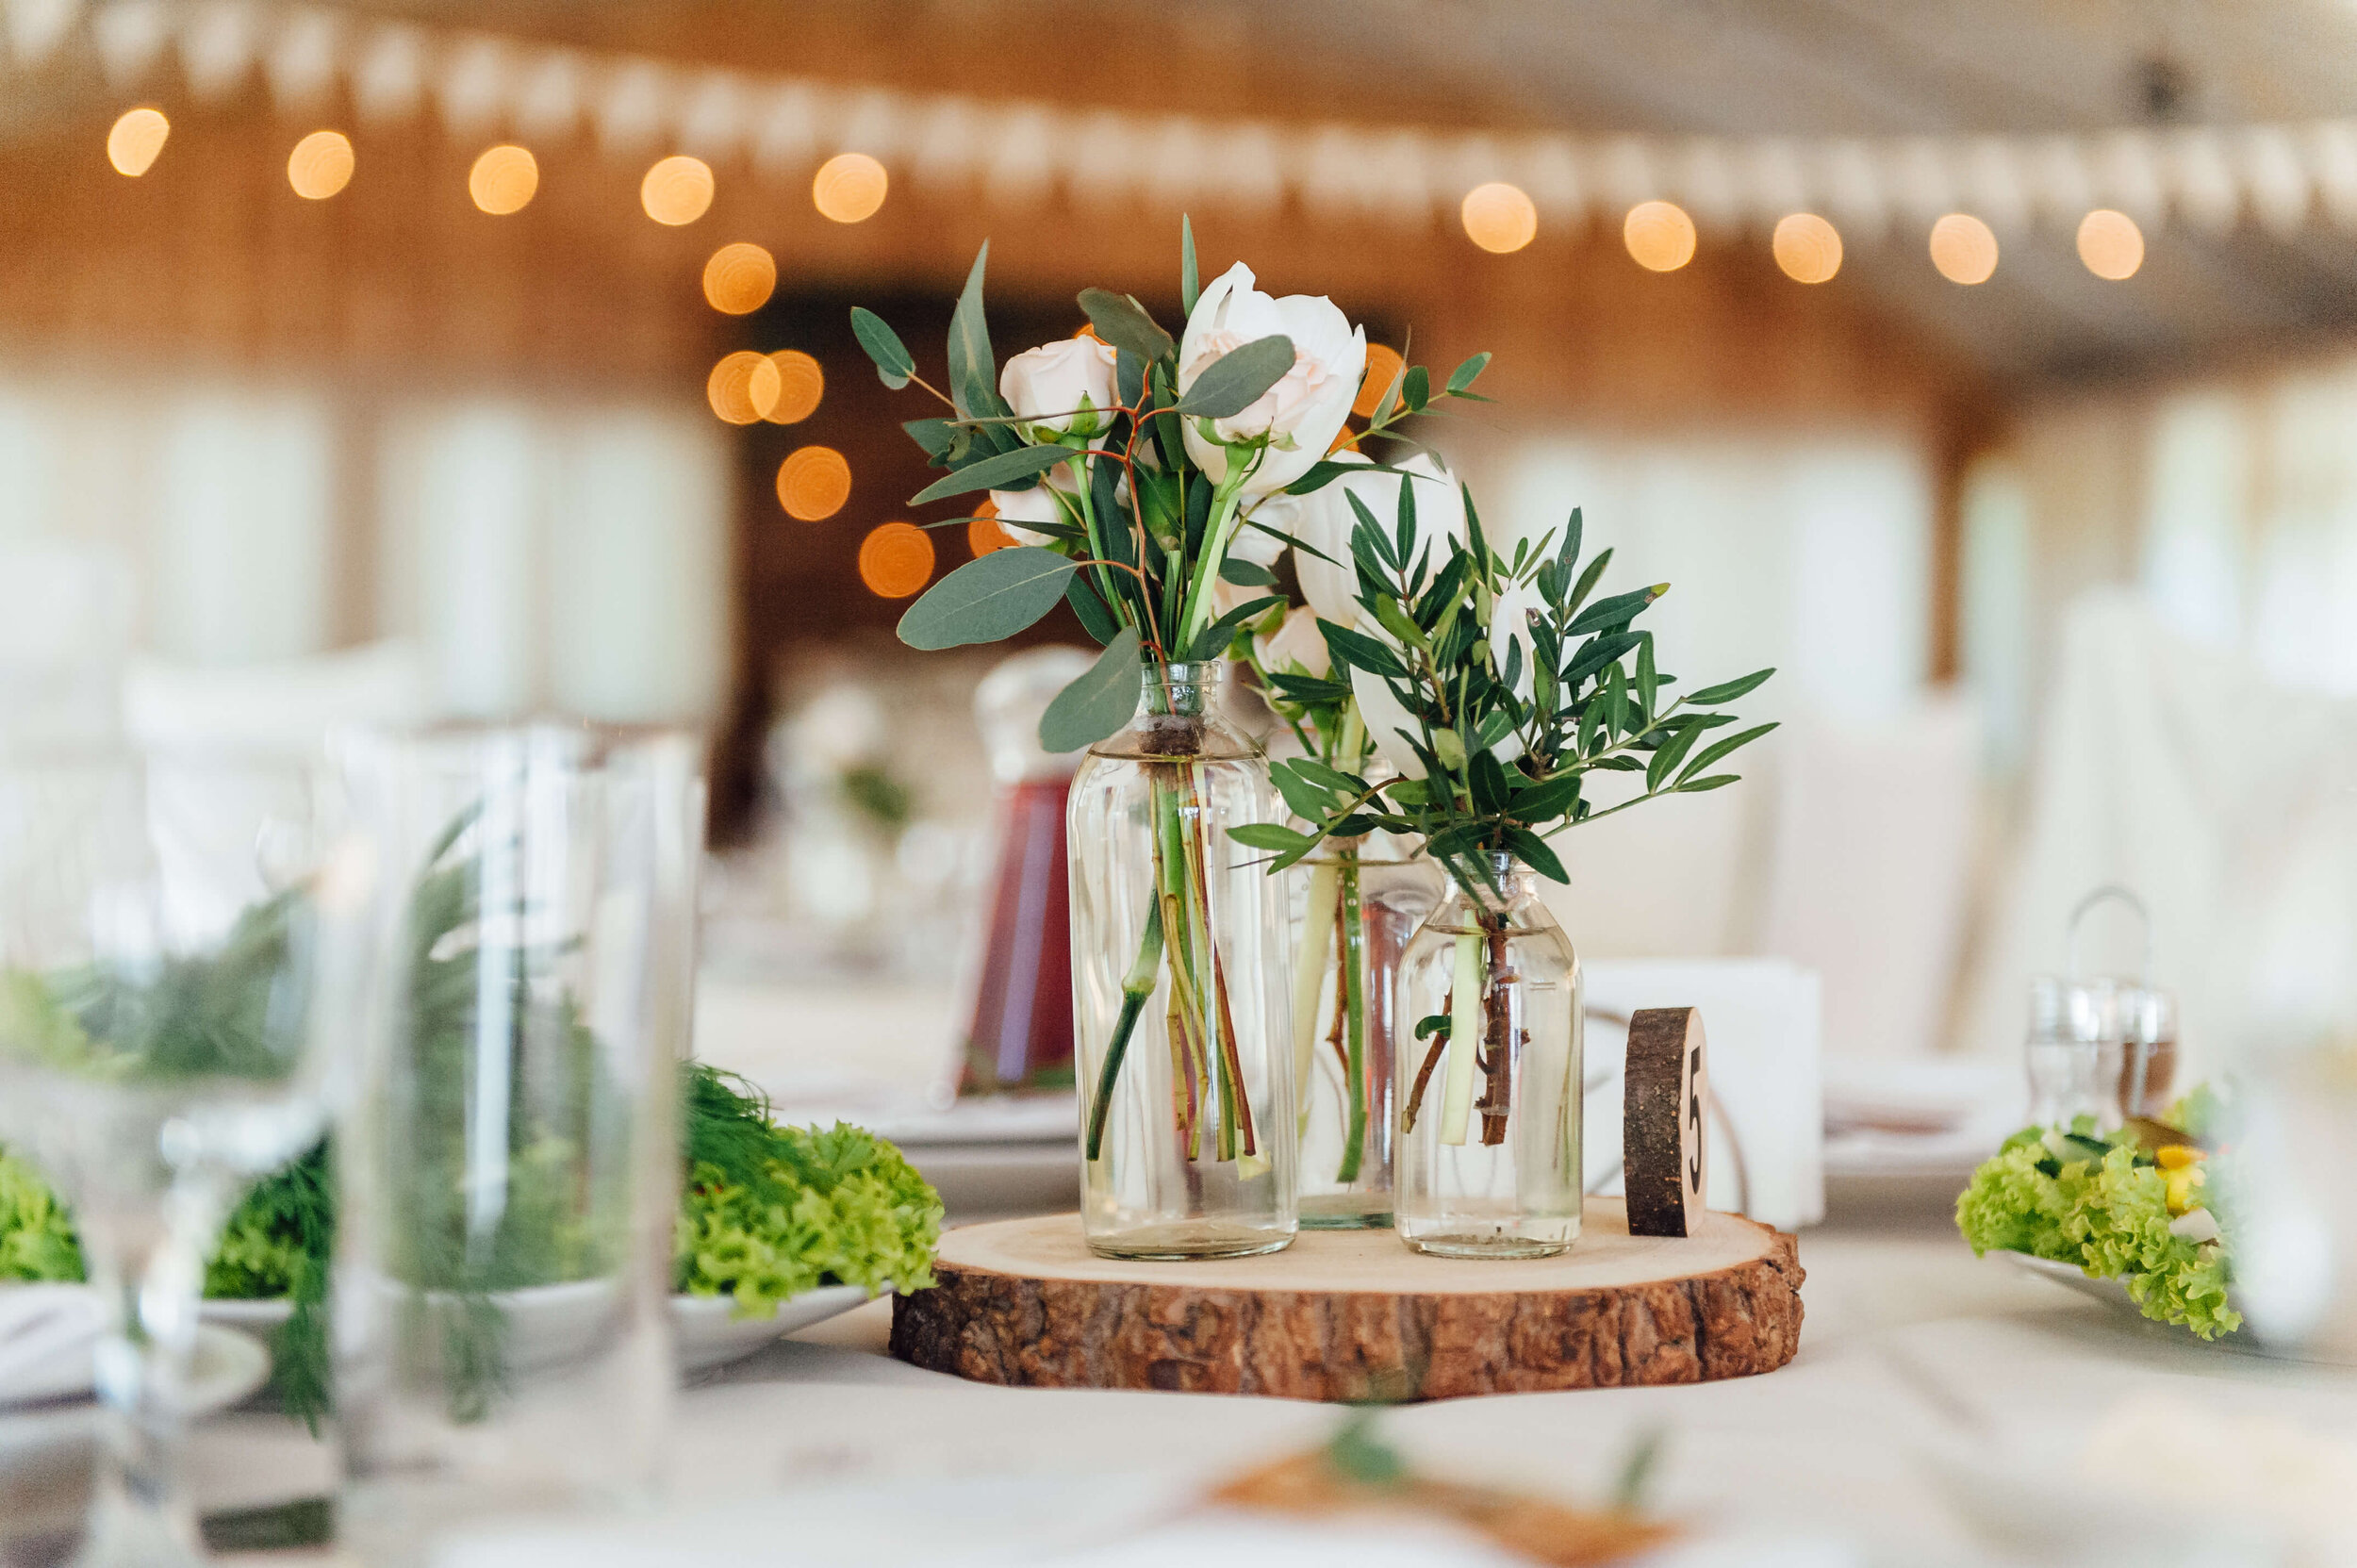 Pearl Vase Filler Plastic Faux Beads Wedding Party Table Decor Centerpieces Mix 